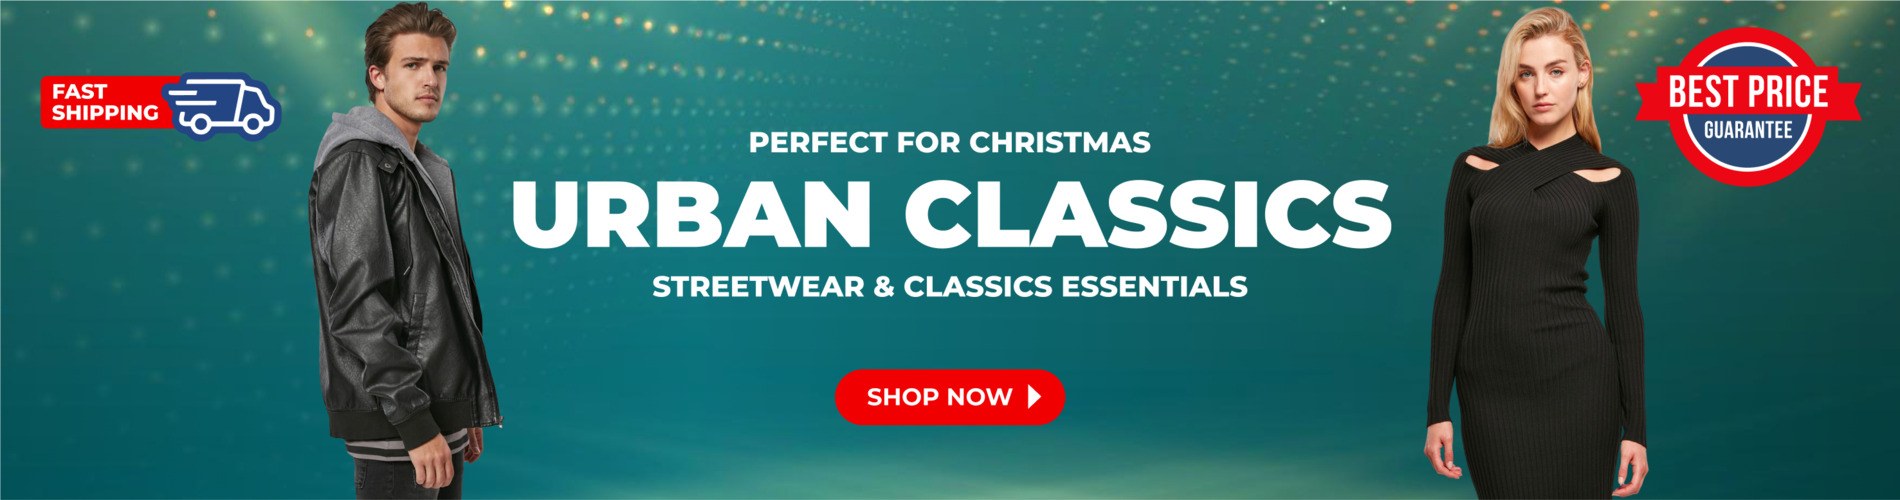 Urban Classics Christmas